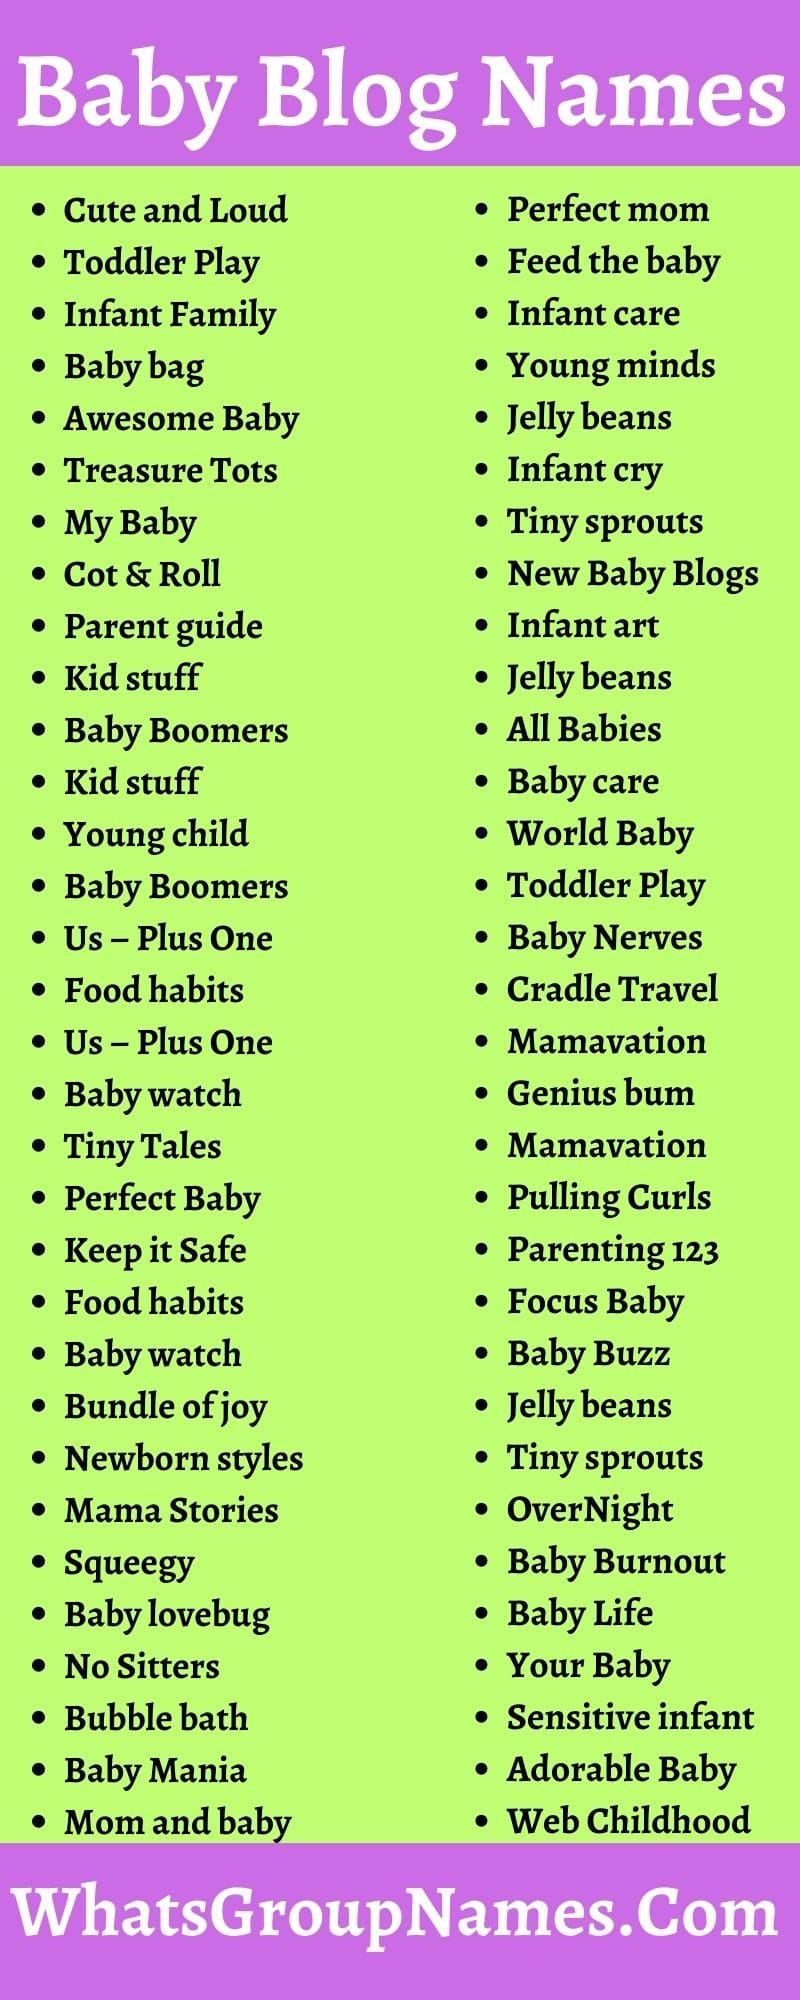 Baby Blog Names